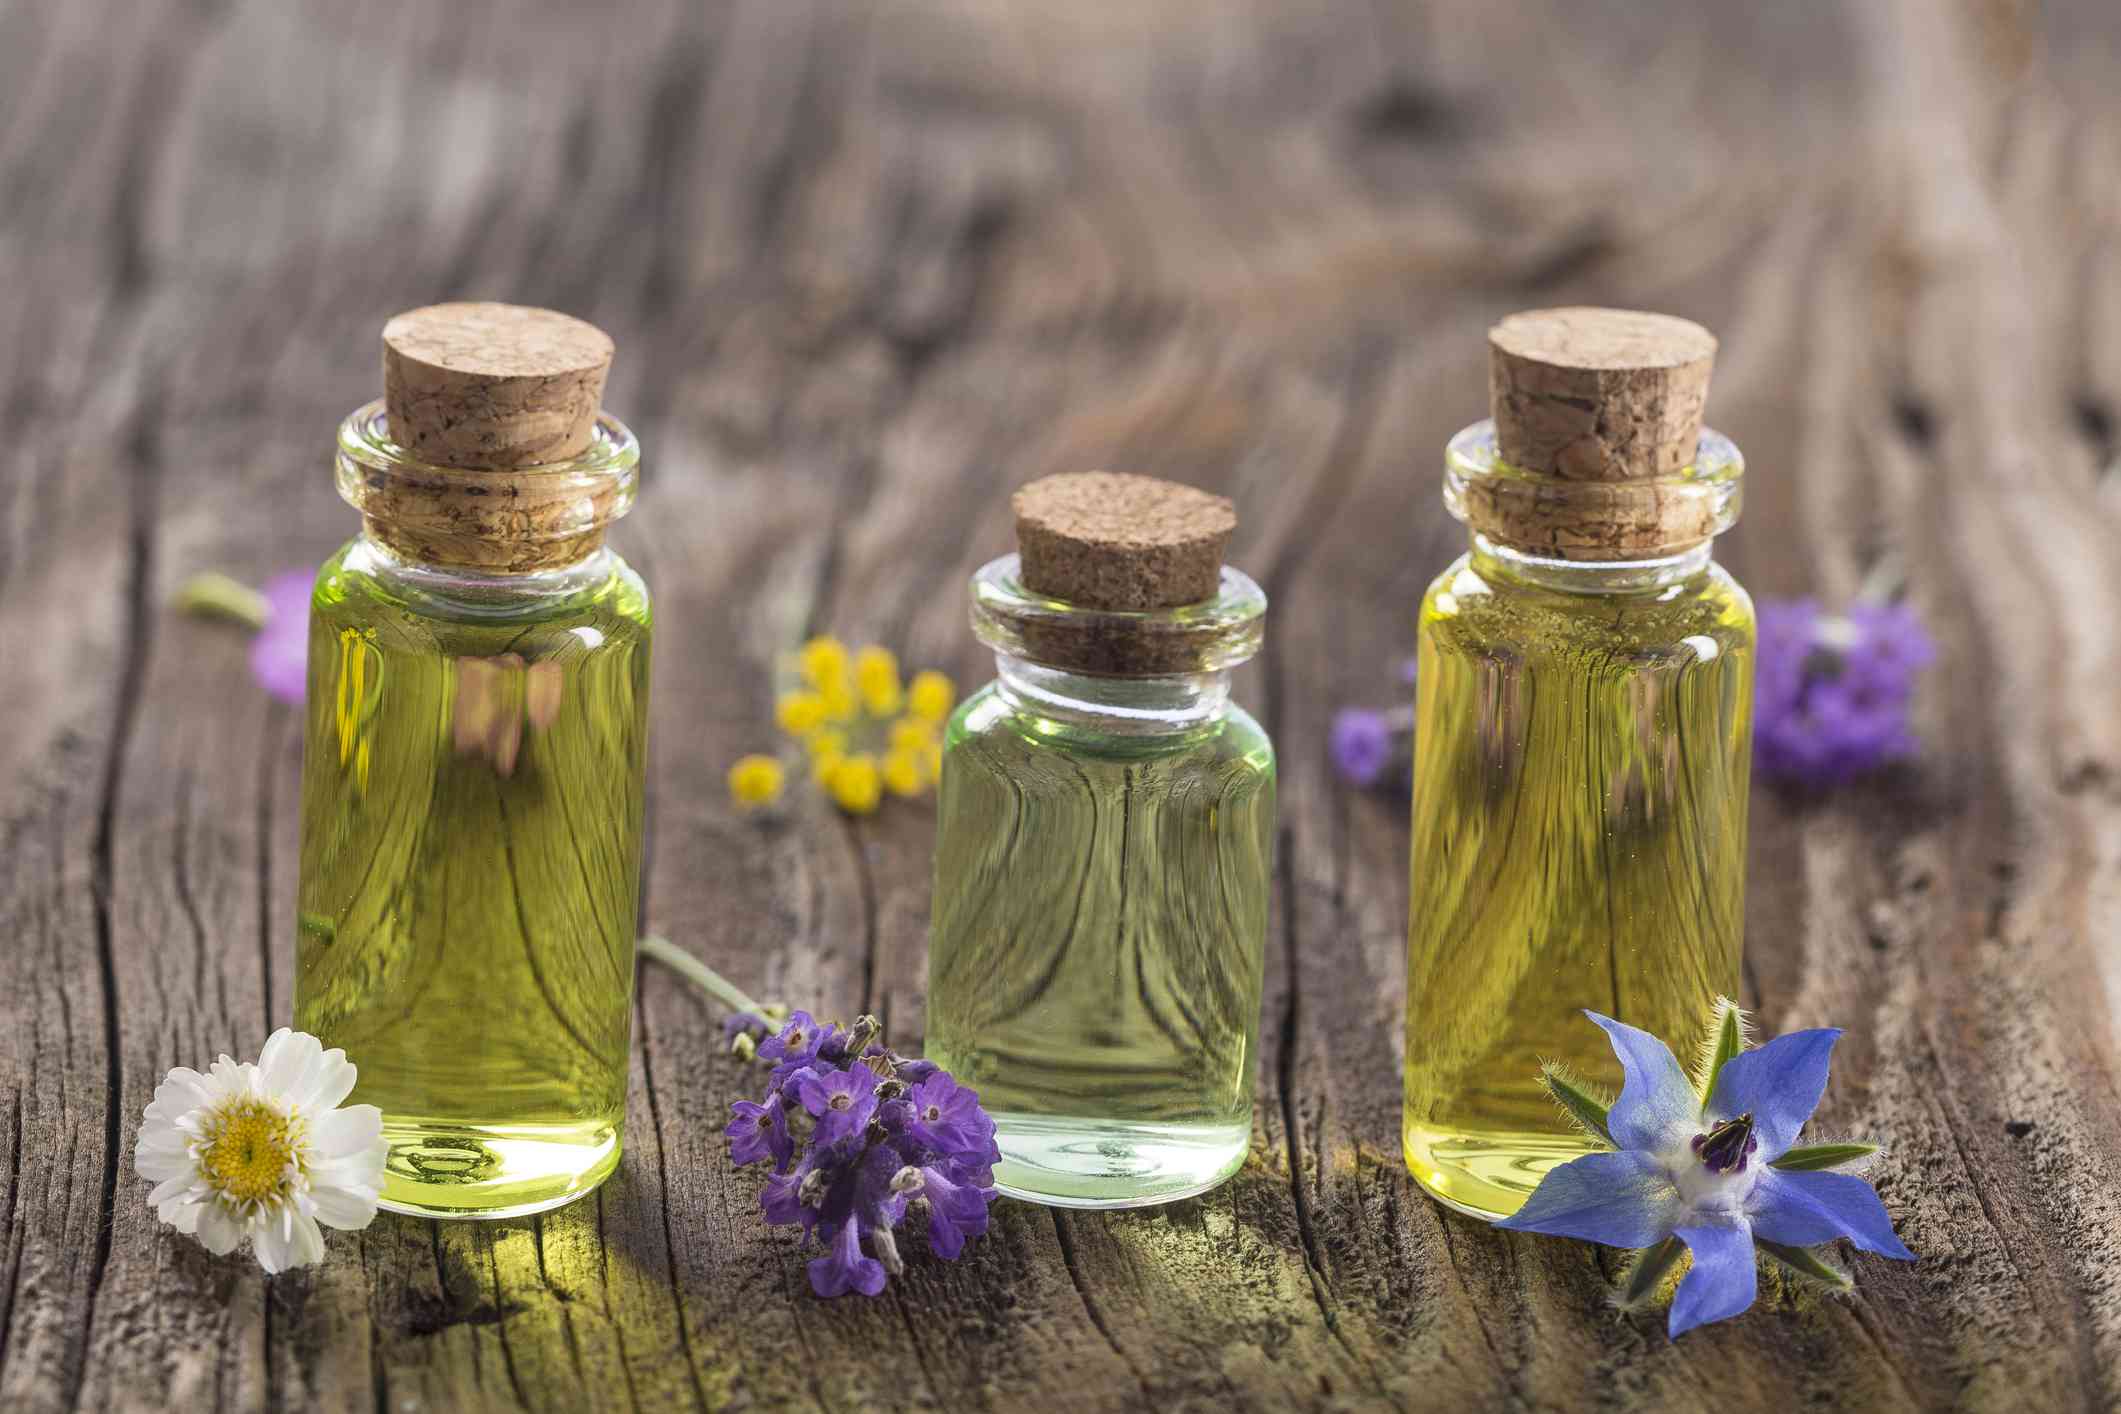 Lavender oil – Benefits